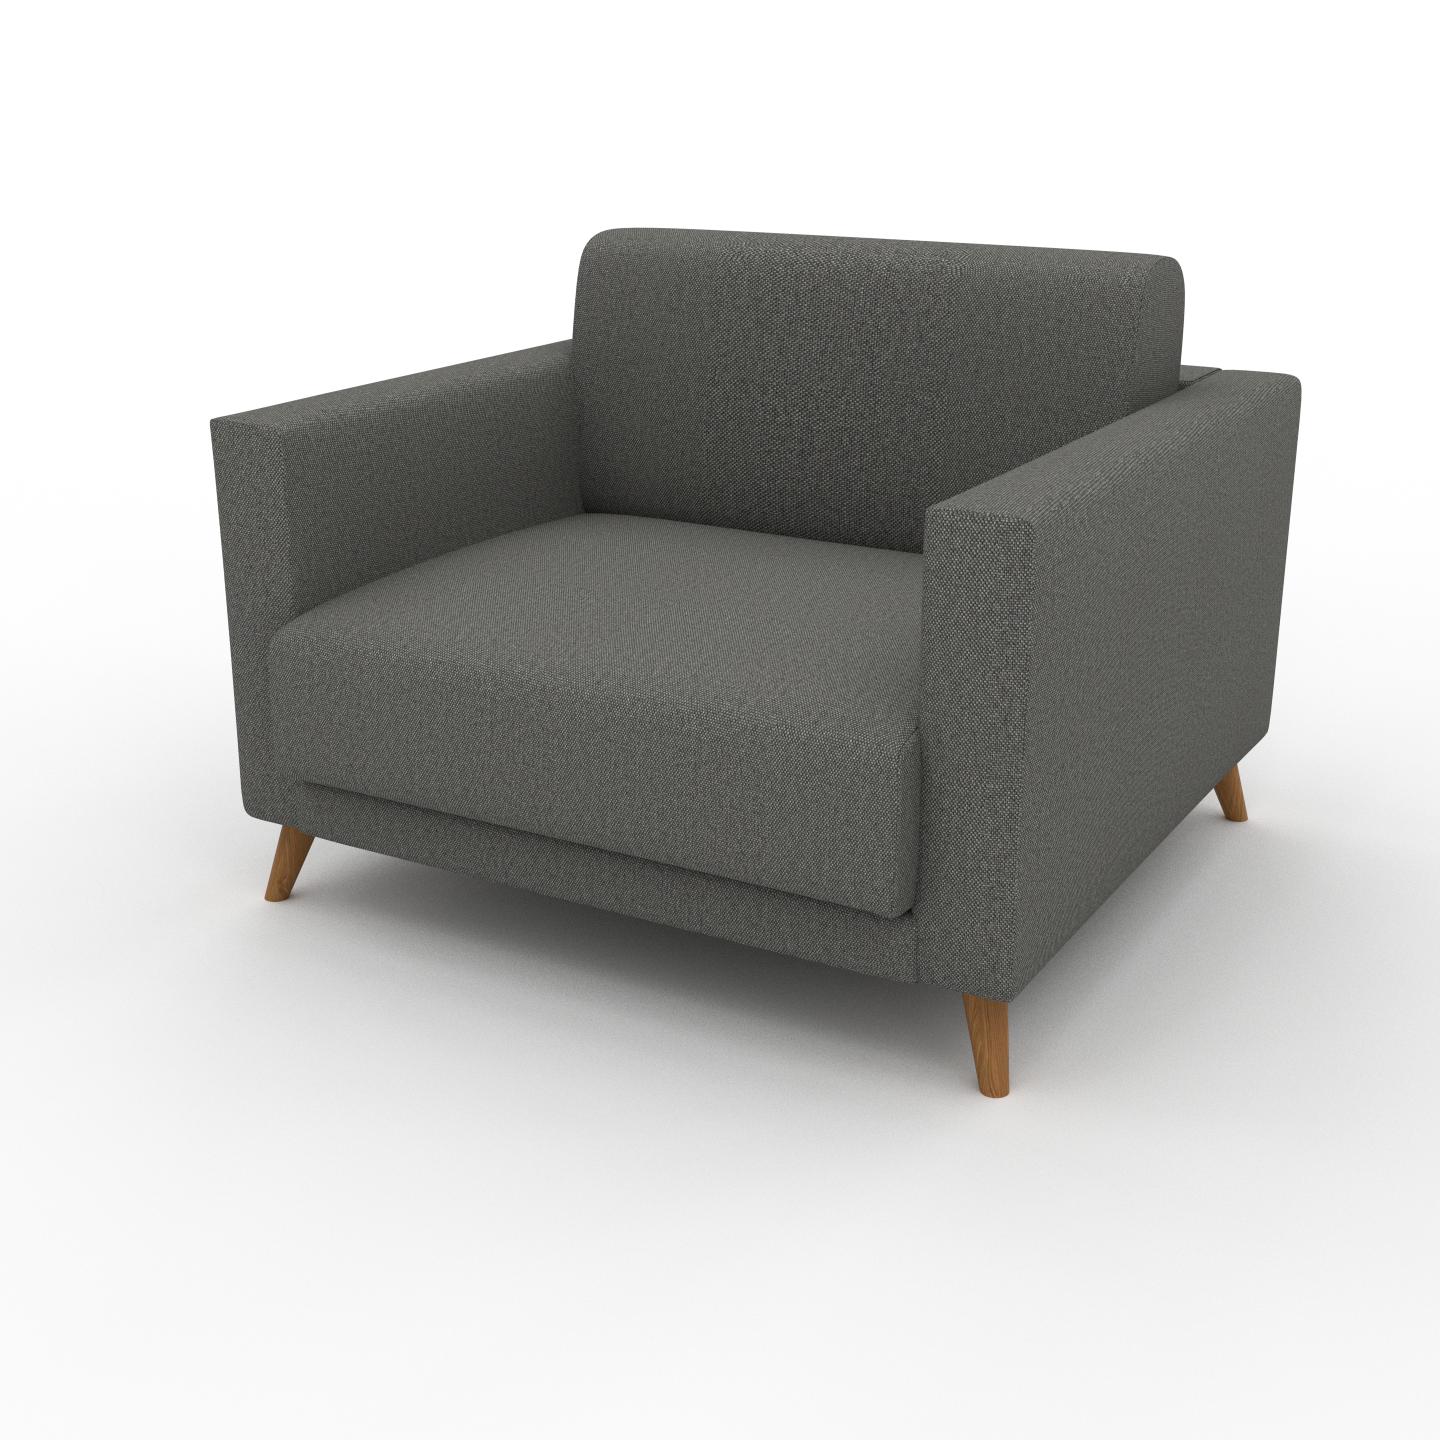 MYCS Sessel Kiesgrau - Eleganter Sessel: Hochwertige Qualität, einzigartiges Design - 105 x 75 x 98 cm, Individuell konfigurierbar